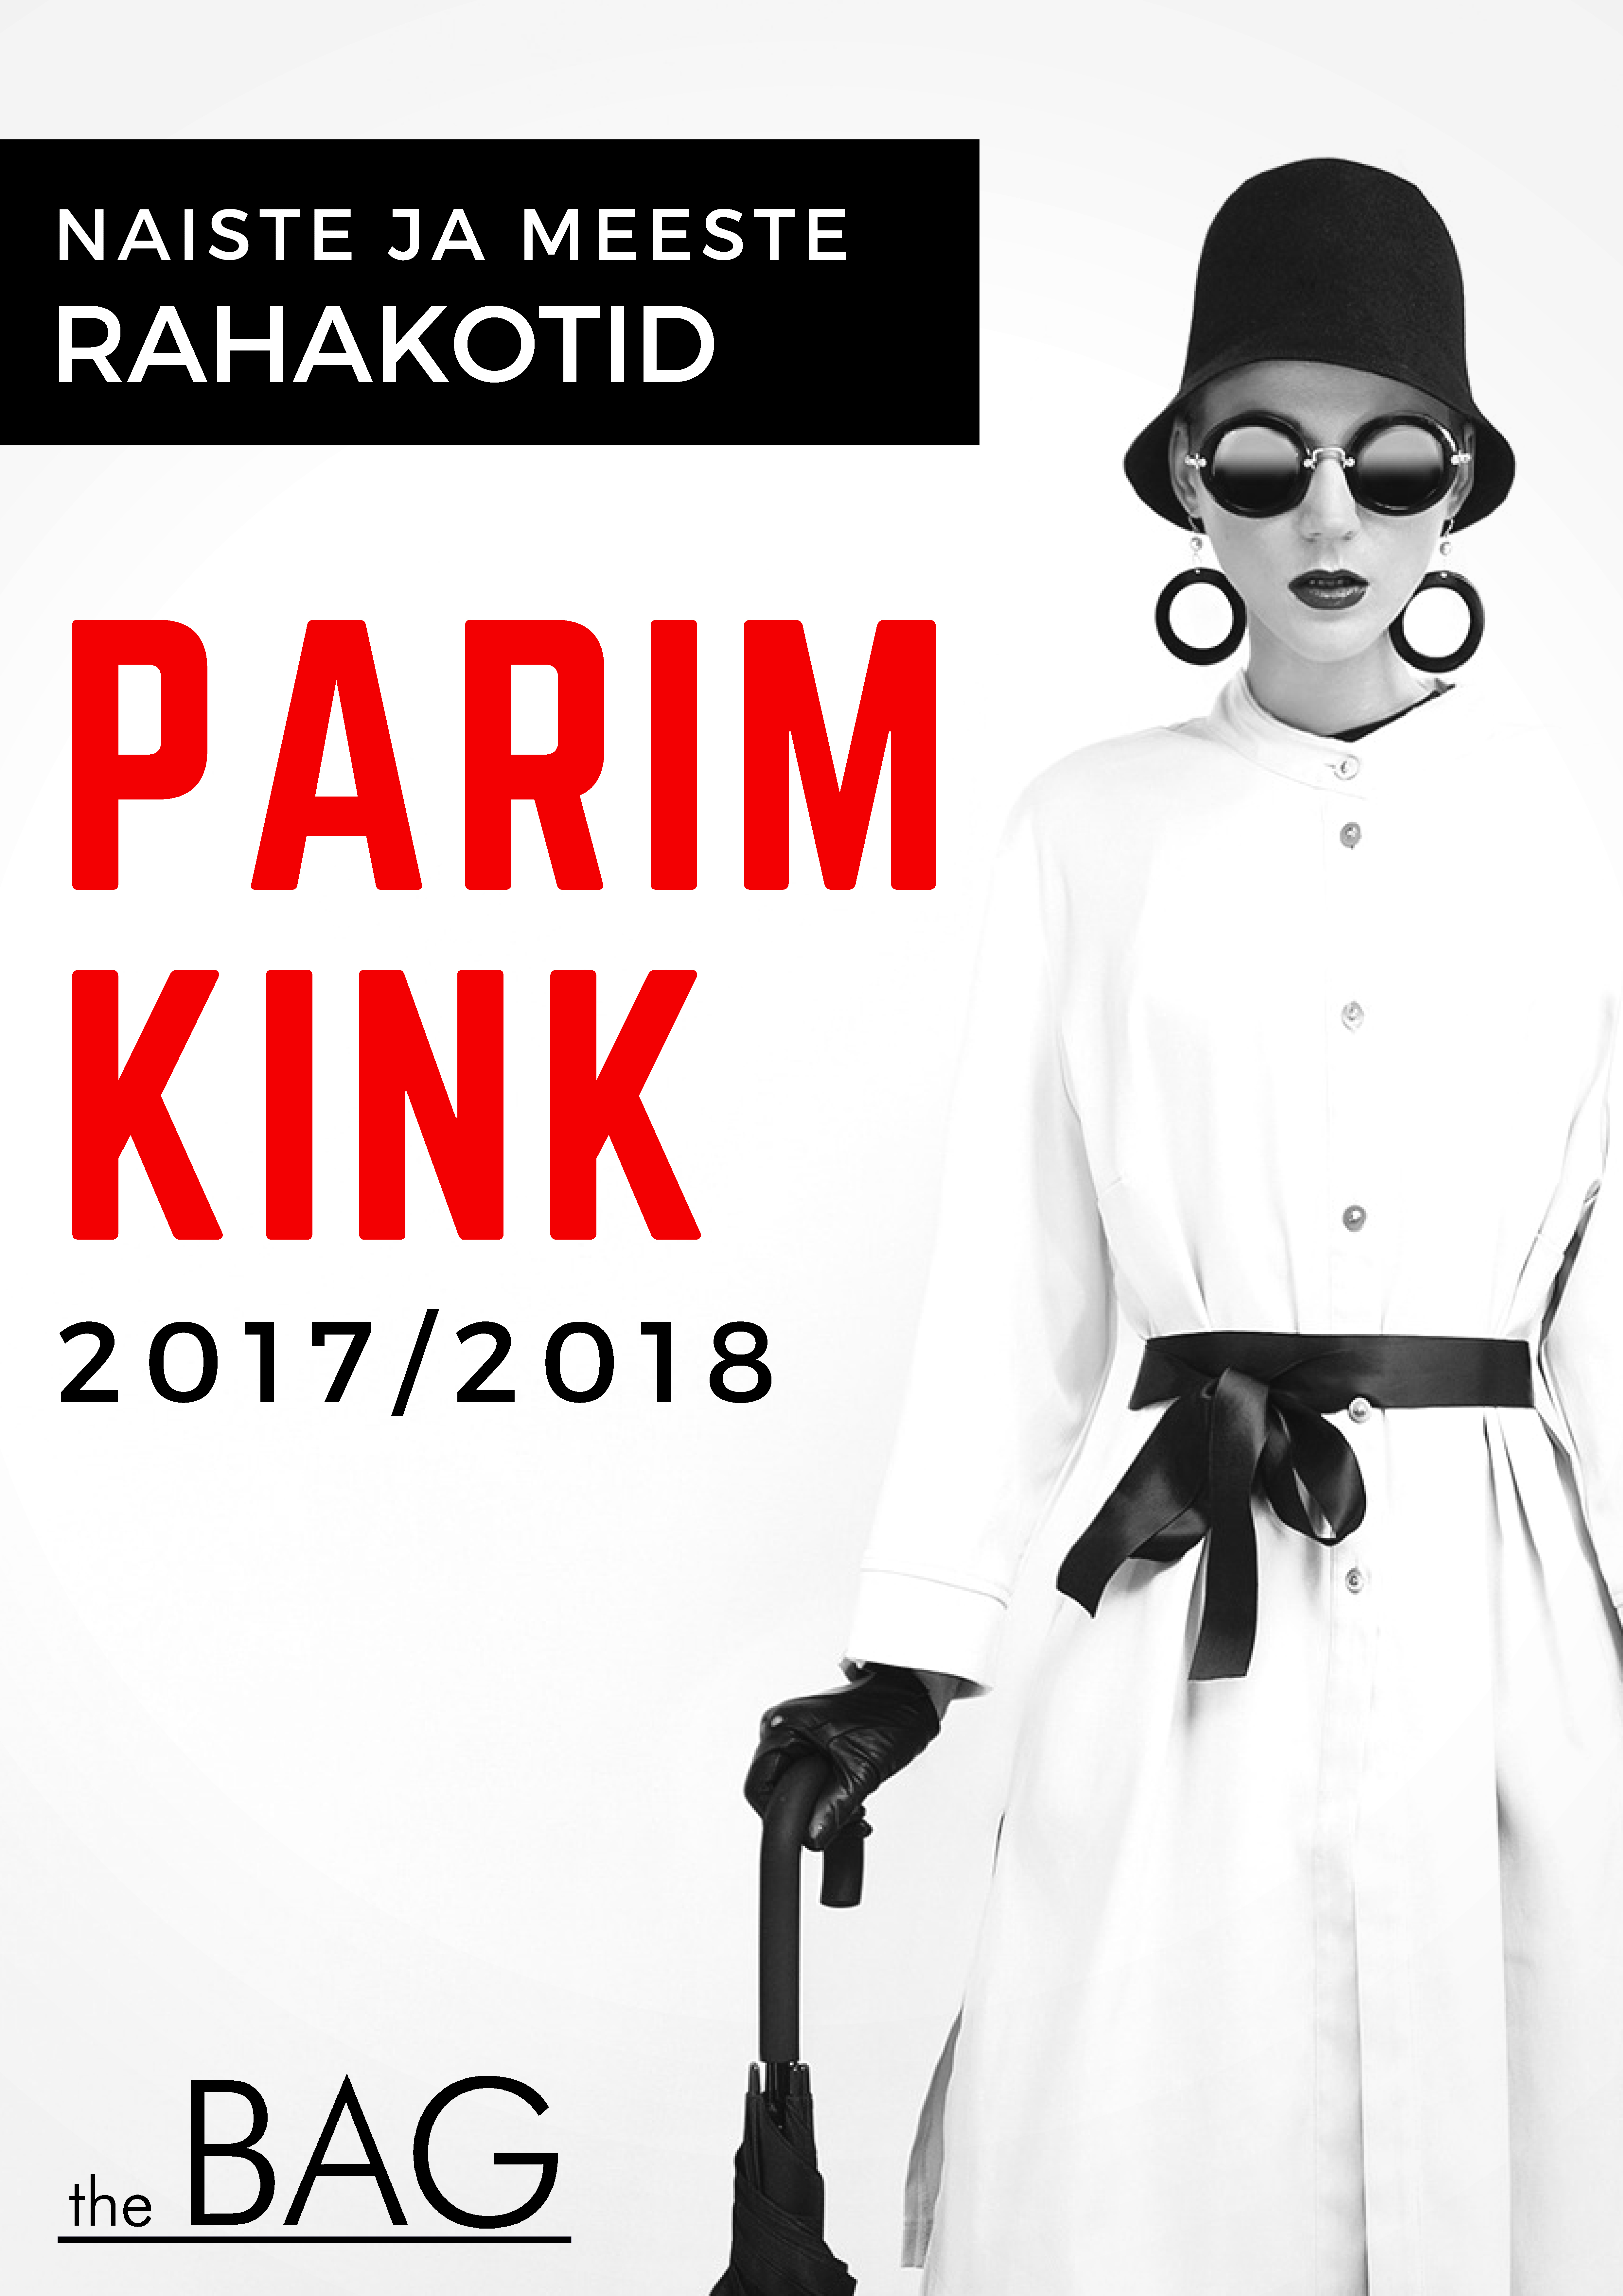 THE BAG PARIM KINK